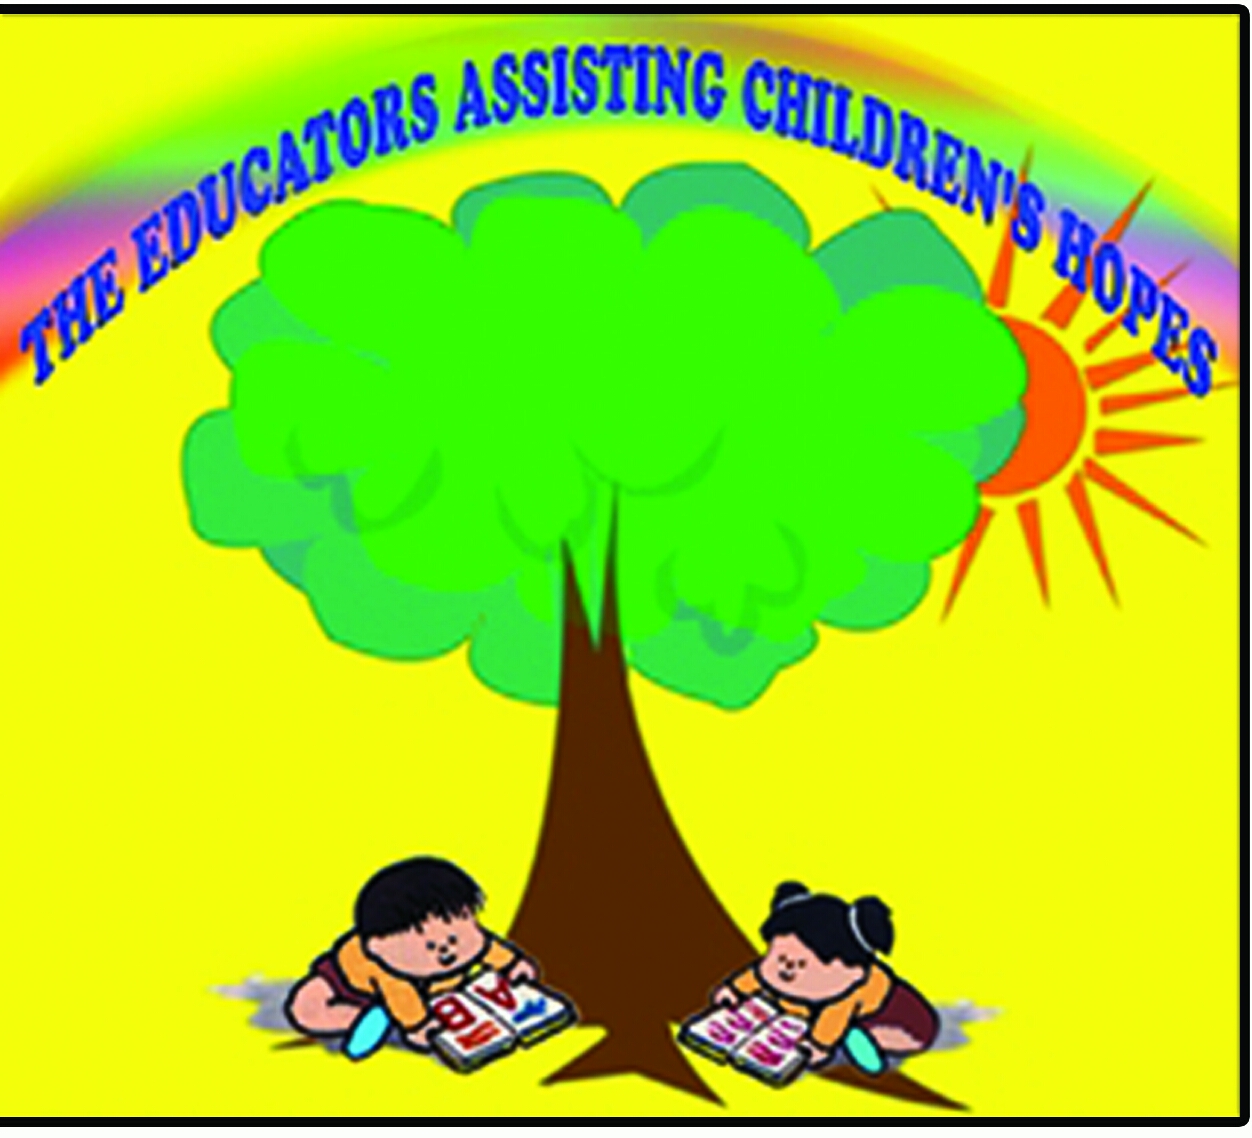 The Educators Assisting Childrens Hopes